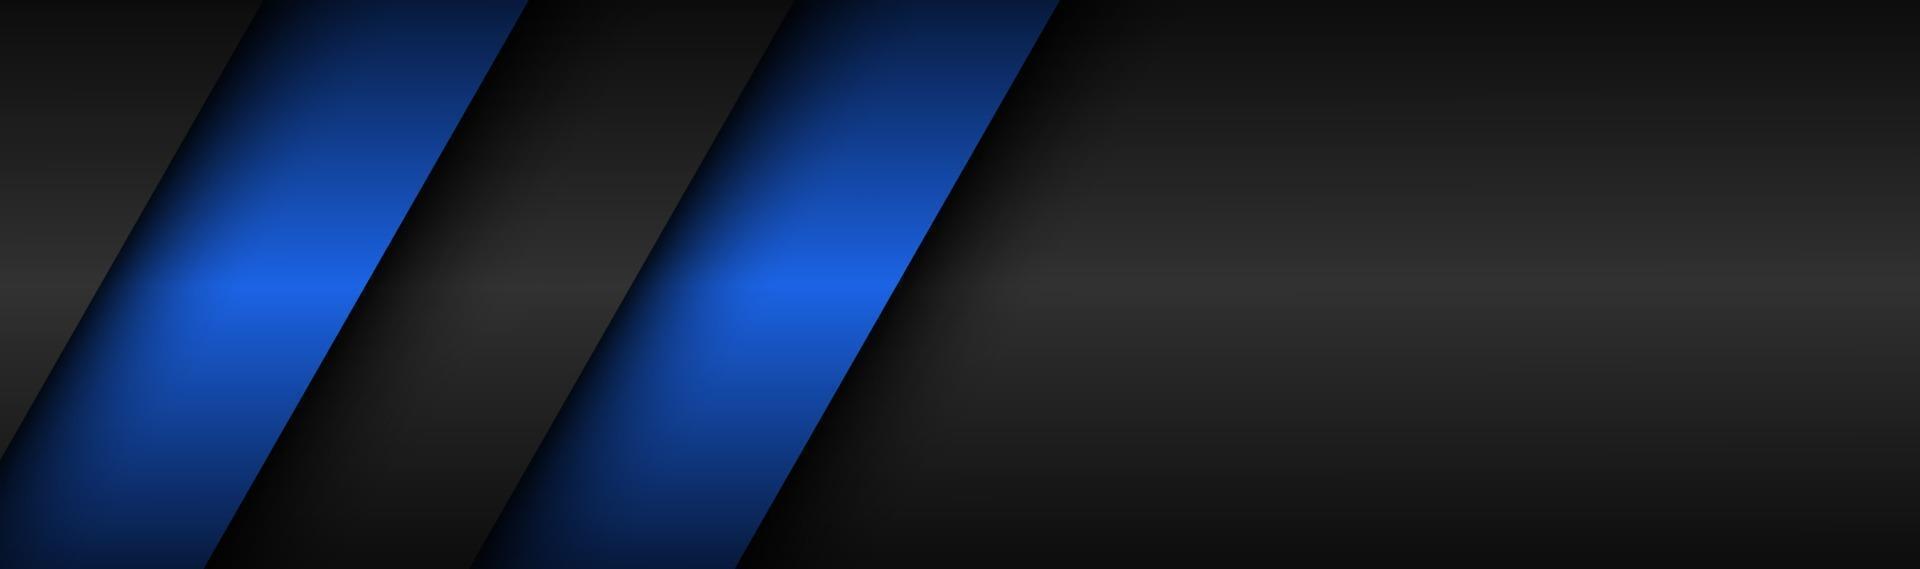 Fondo de pantalla panorámica abstracto de vector de banner de tecnología de encabezado de material moderno negro y azul